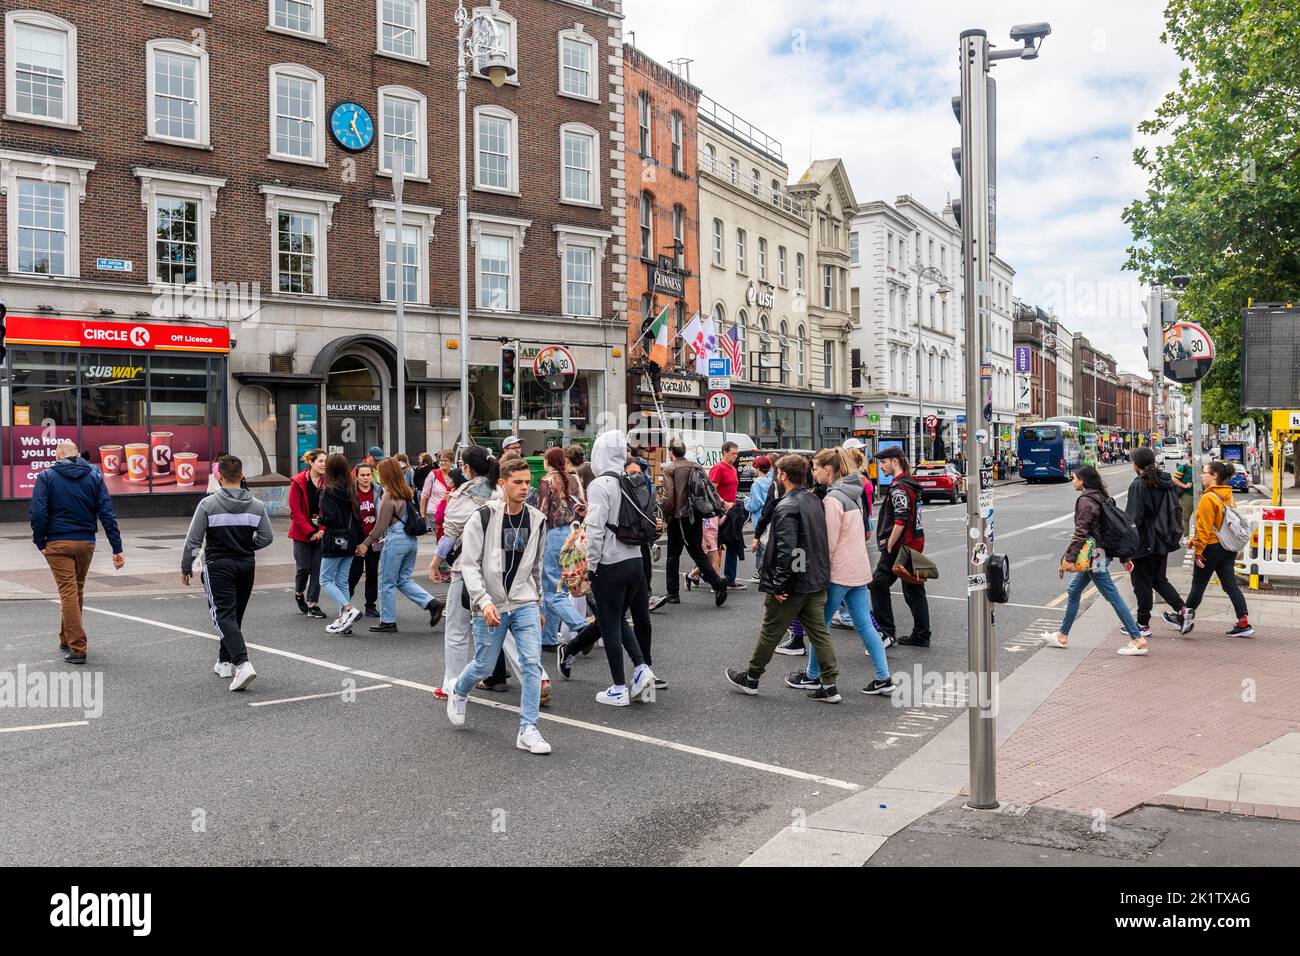 Pedestrians crossing a road using a pedestrian crossing in Dublin City Centre, Ireland. Stock Photo